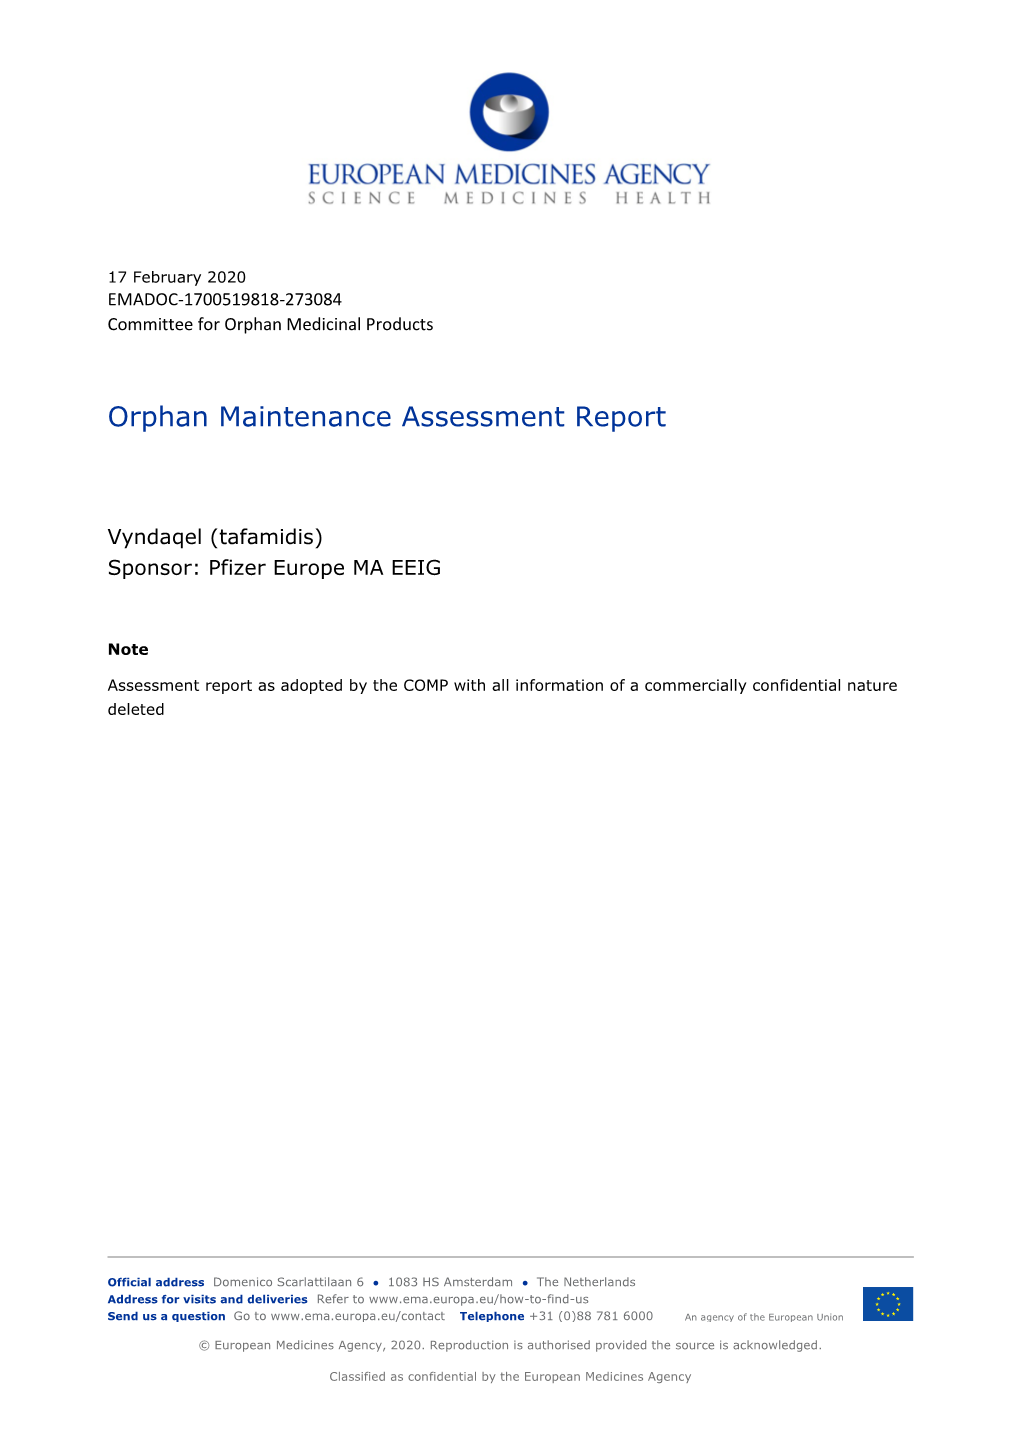 Vyndaqel-Orphan-Maintenance-Assessment-Report-Post-Authorisation En.Pdf